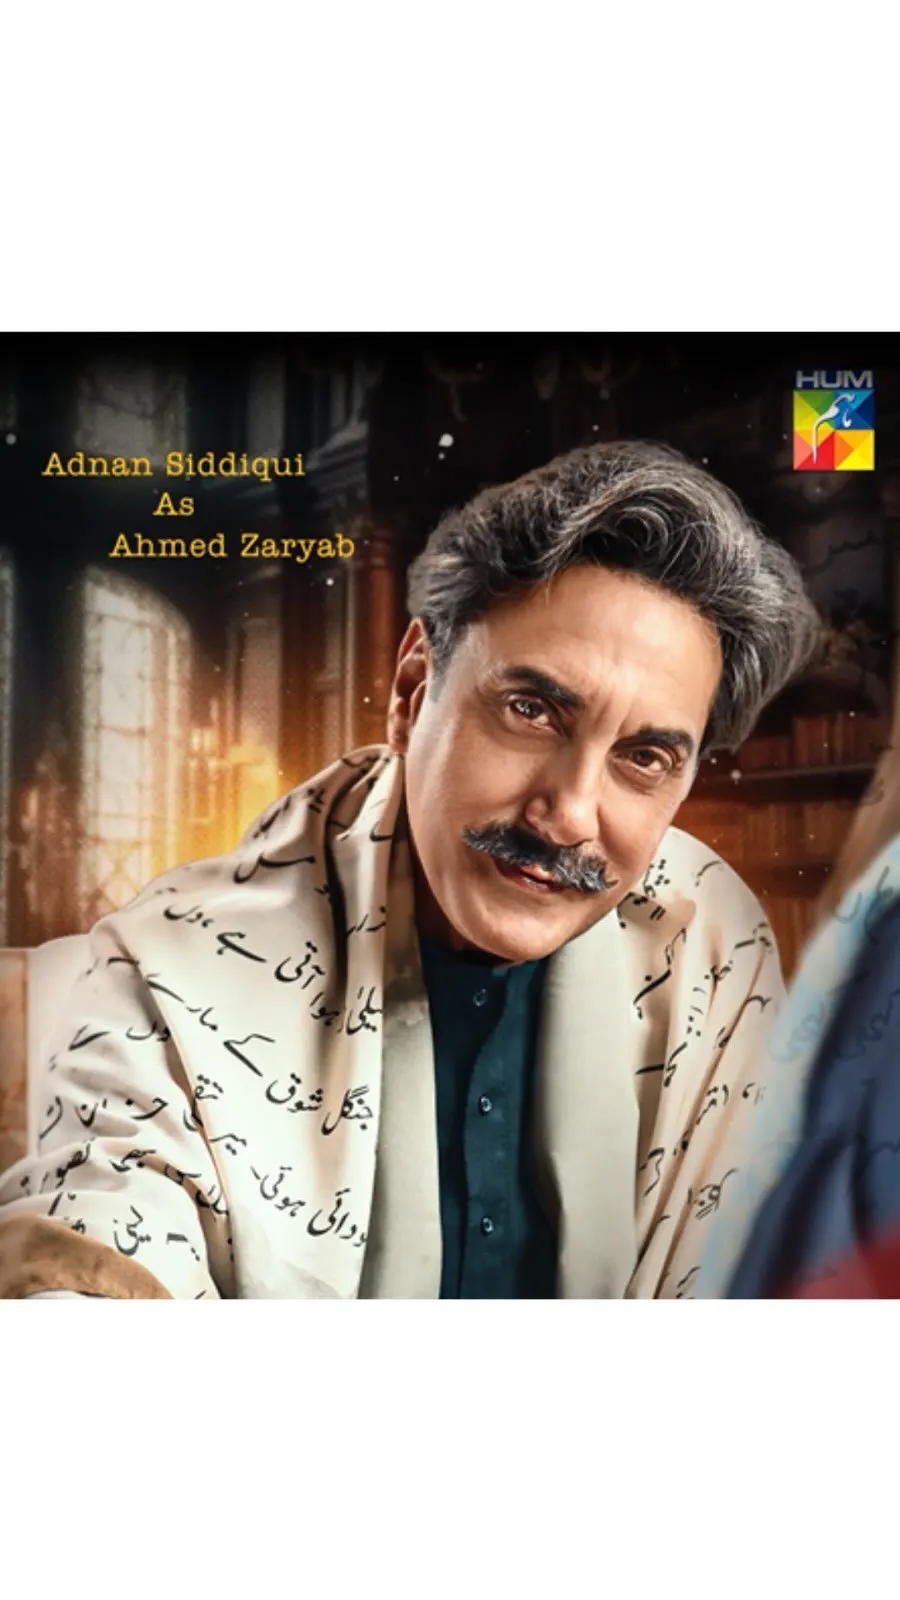 Adnana siddiqui as Ahmed Zaryab